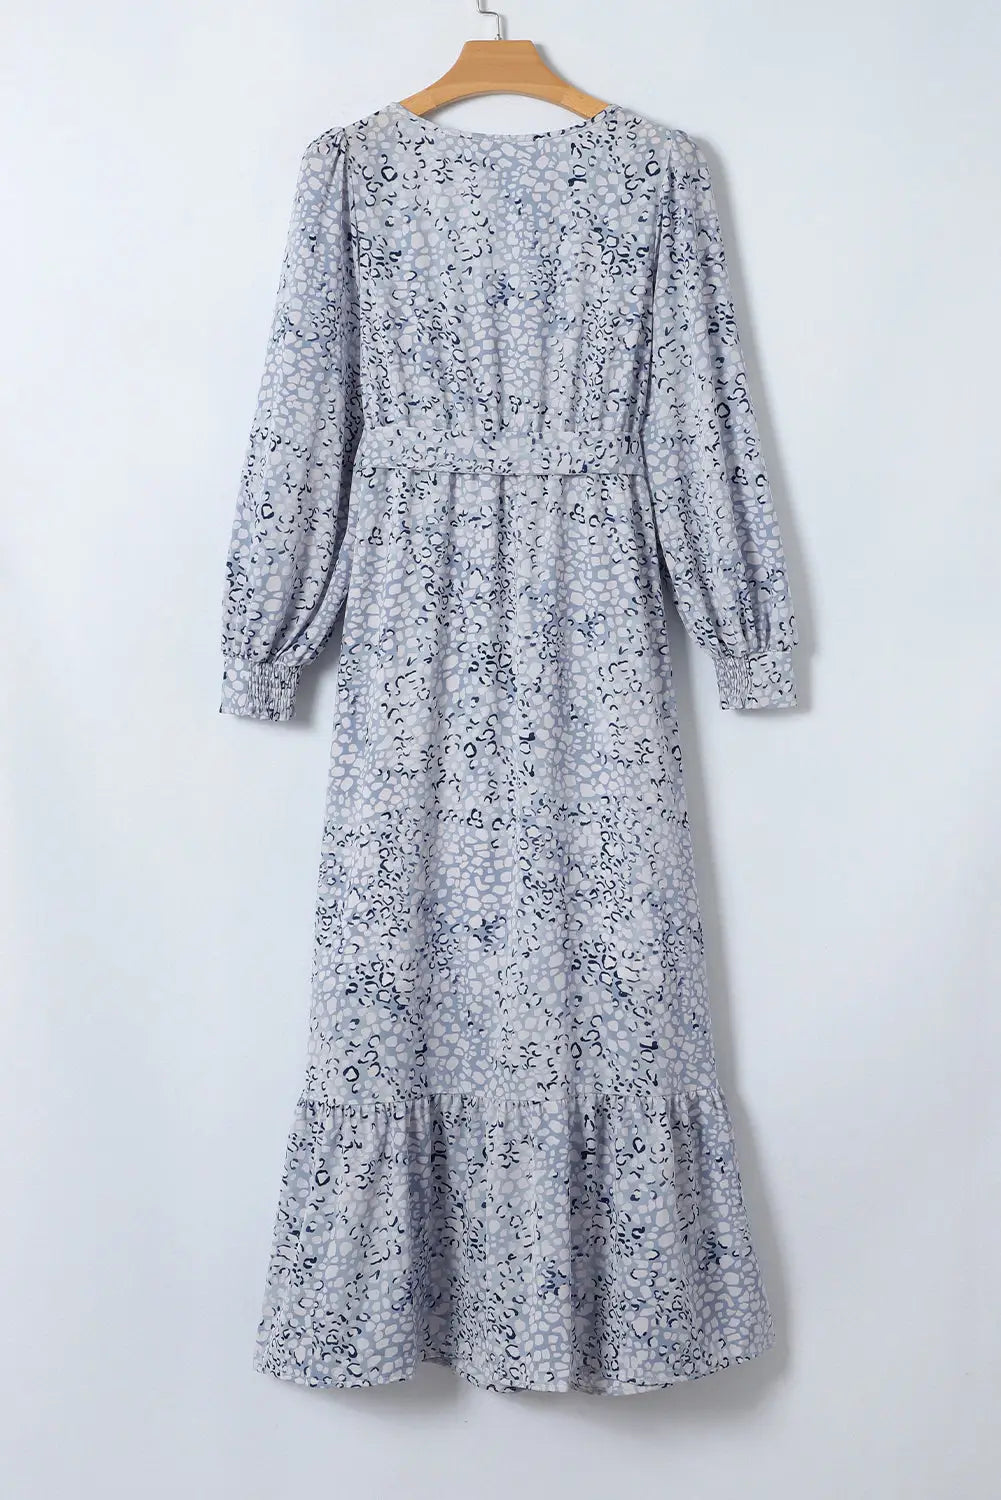 Sky blue printed surplice neck bubble sleeve maxi dress with sash - dresses